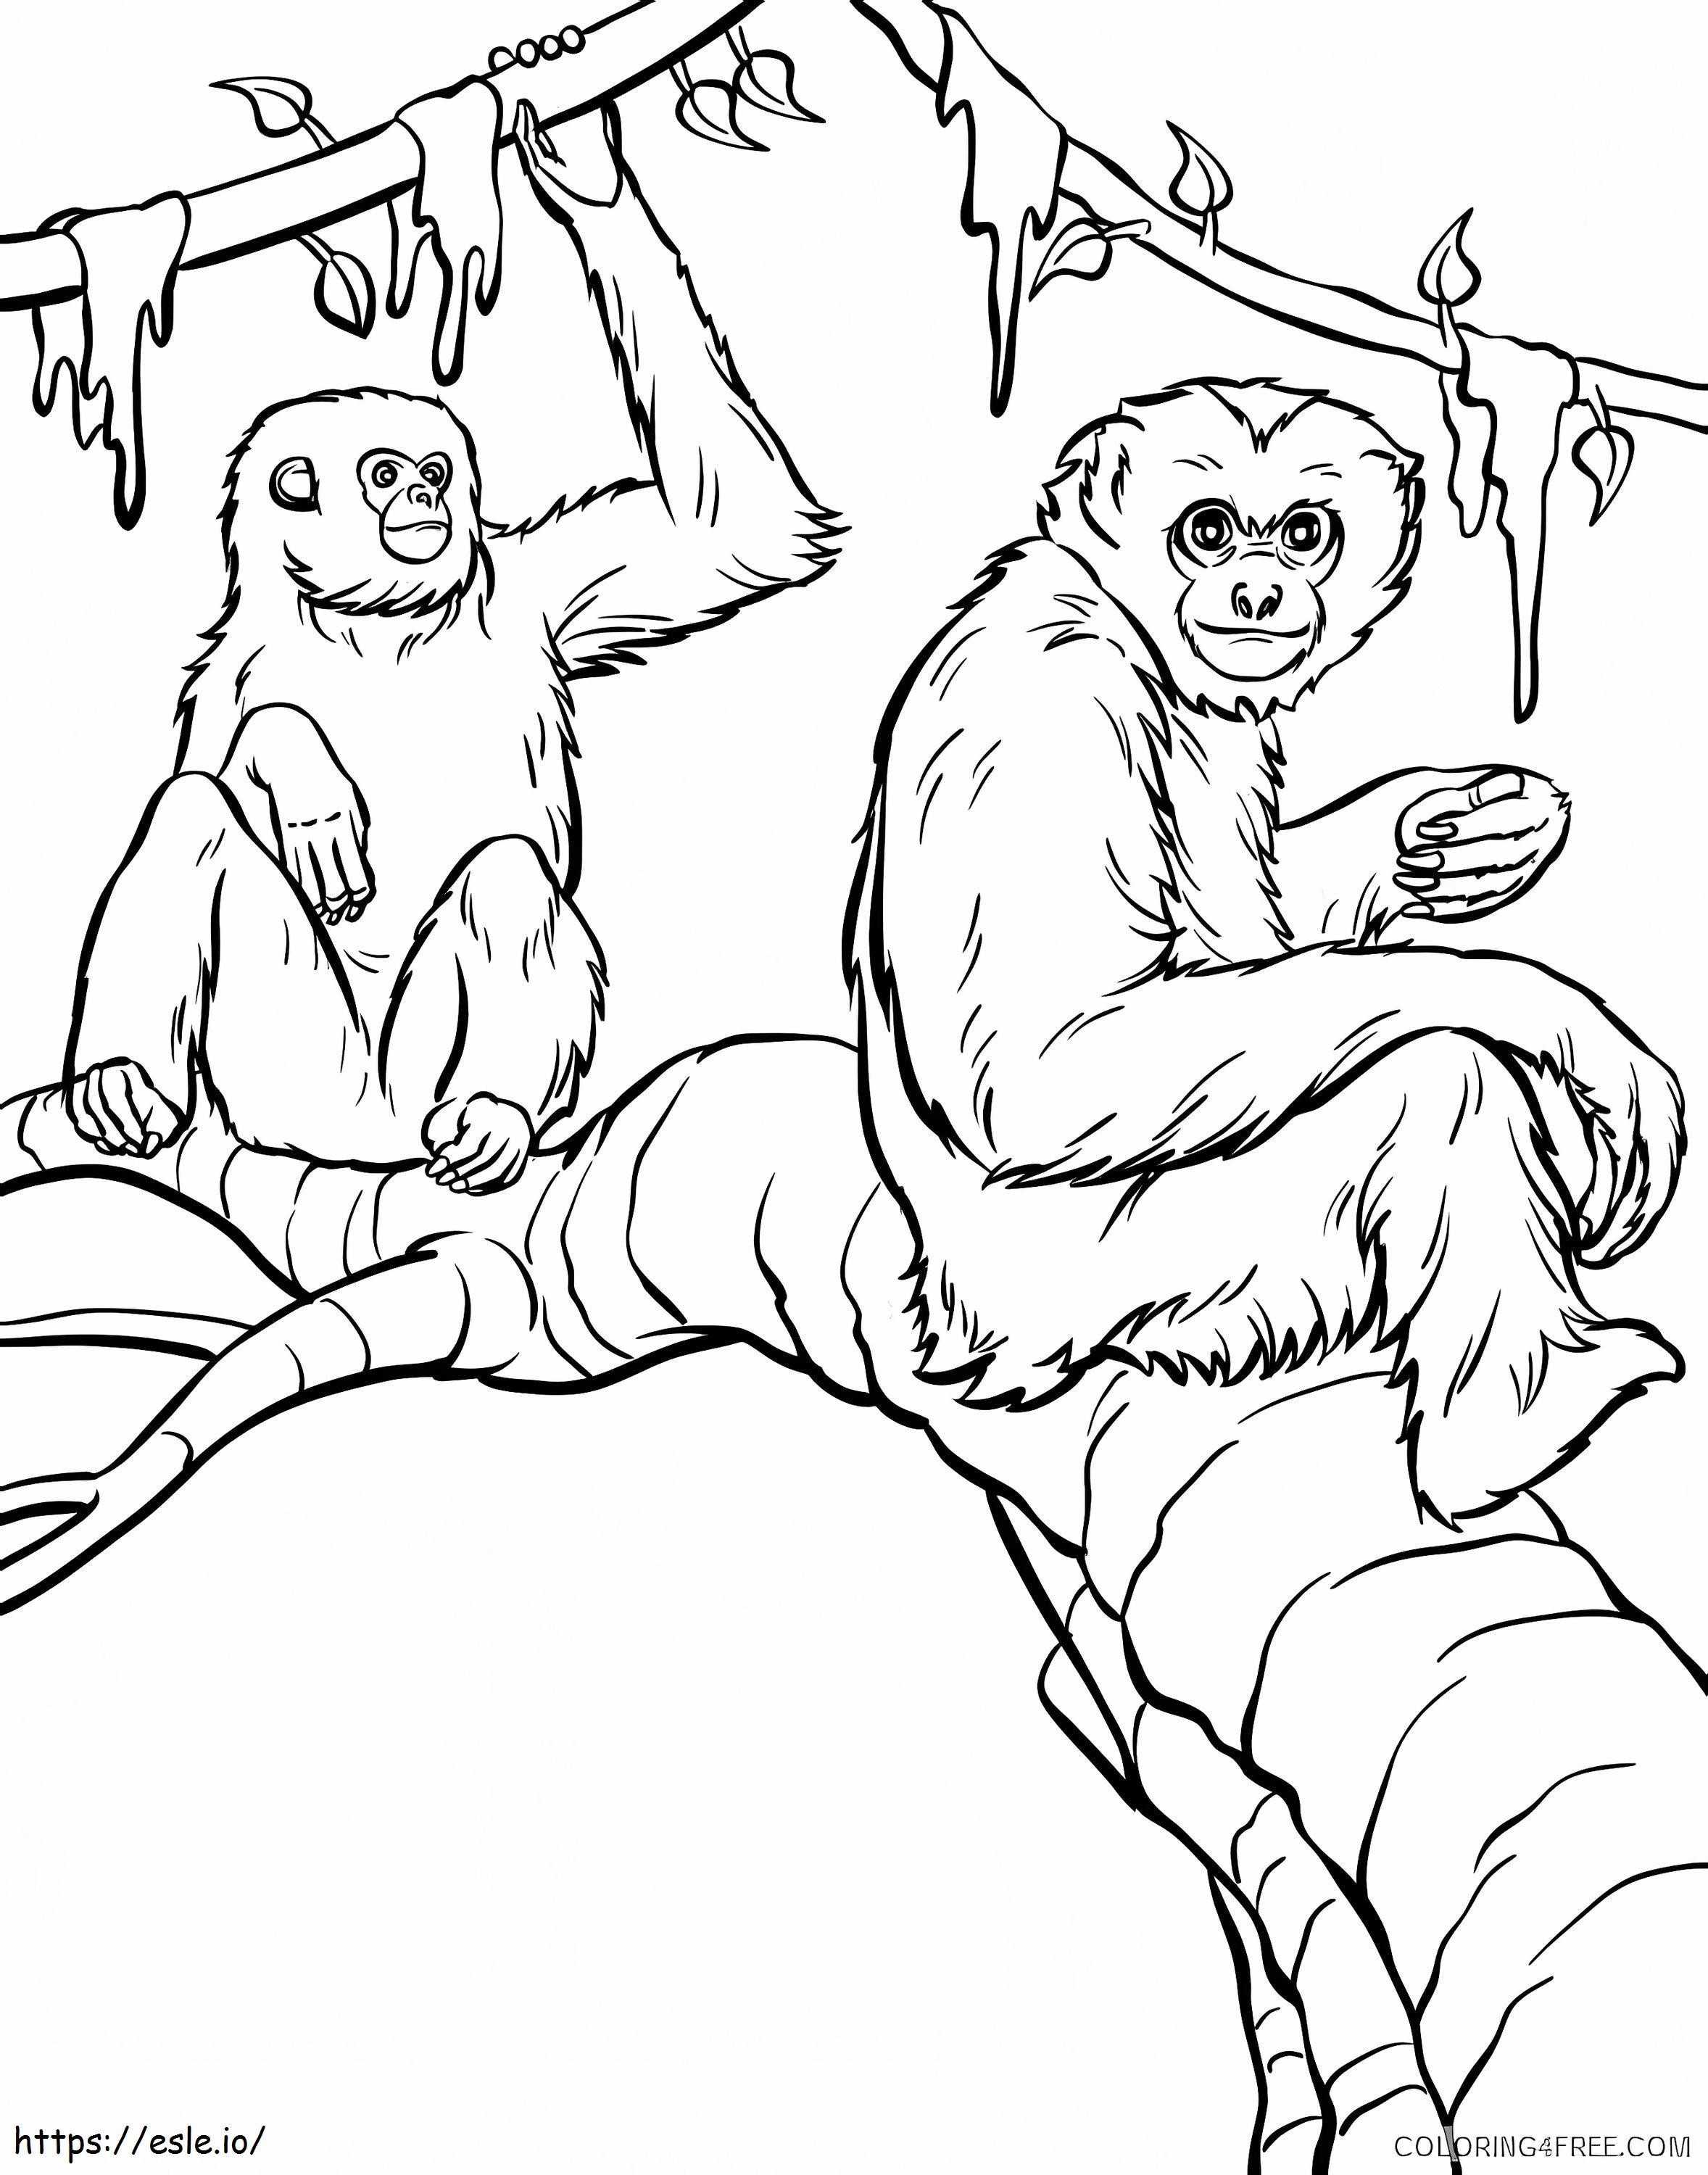 Two Orangutan Climbing coloring page